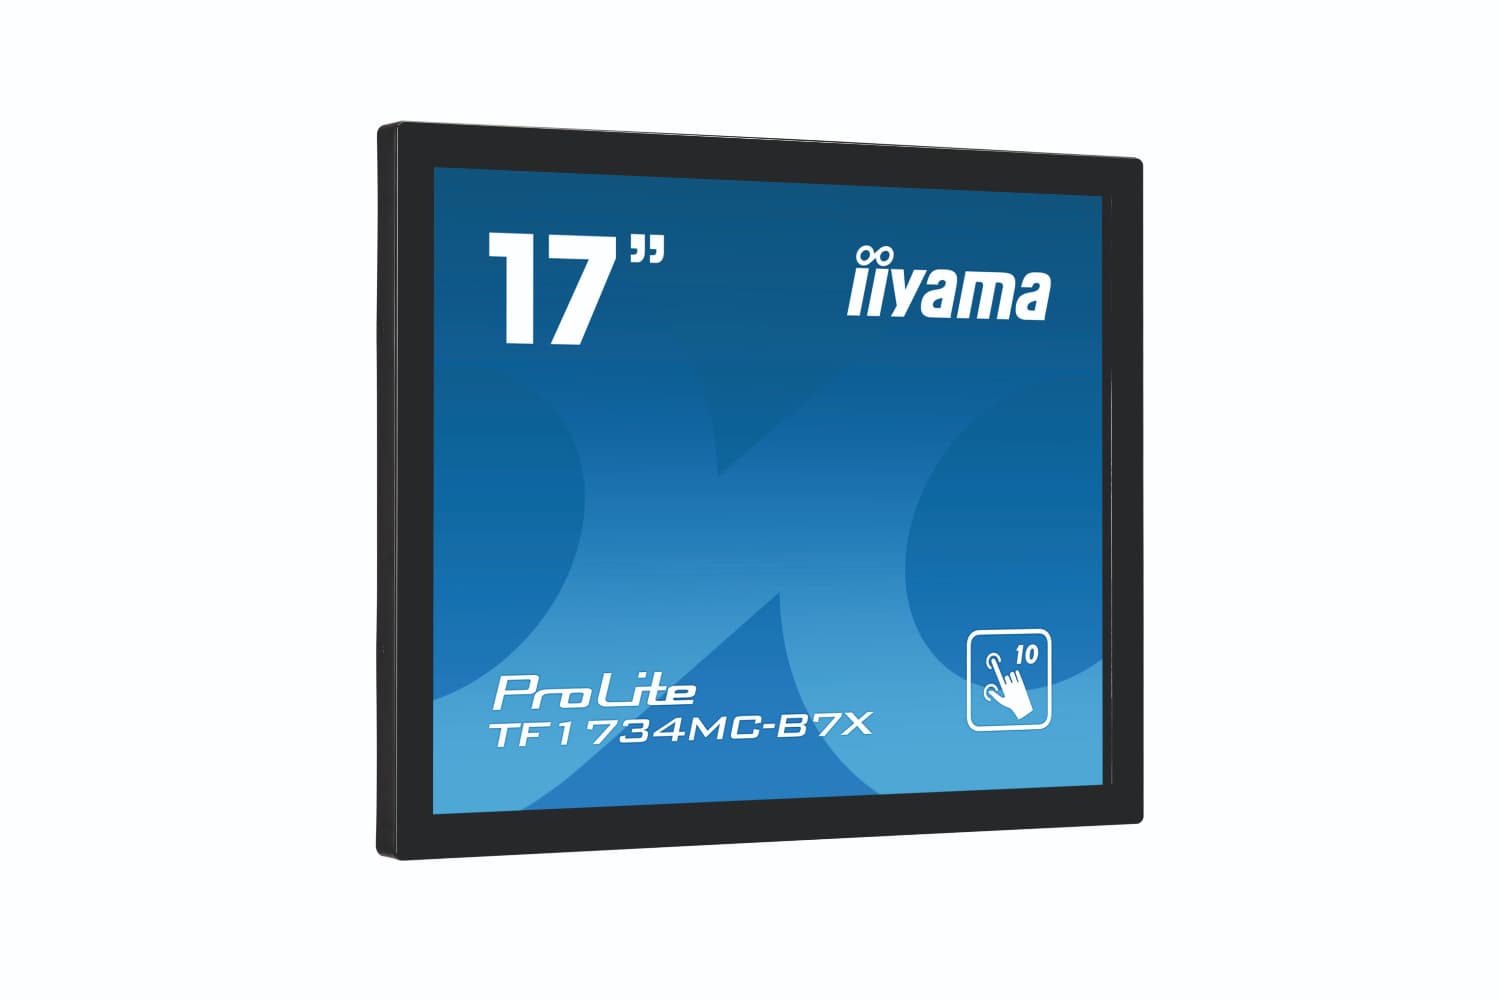  Фото интерактивная панель iiyama 17" tf1734mc-b7x - фото 2